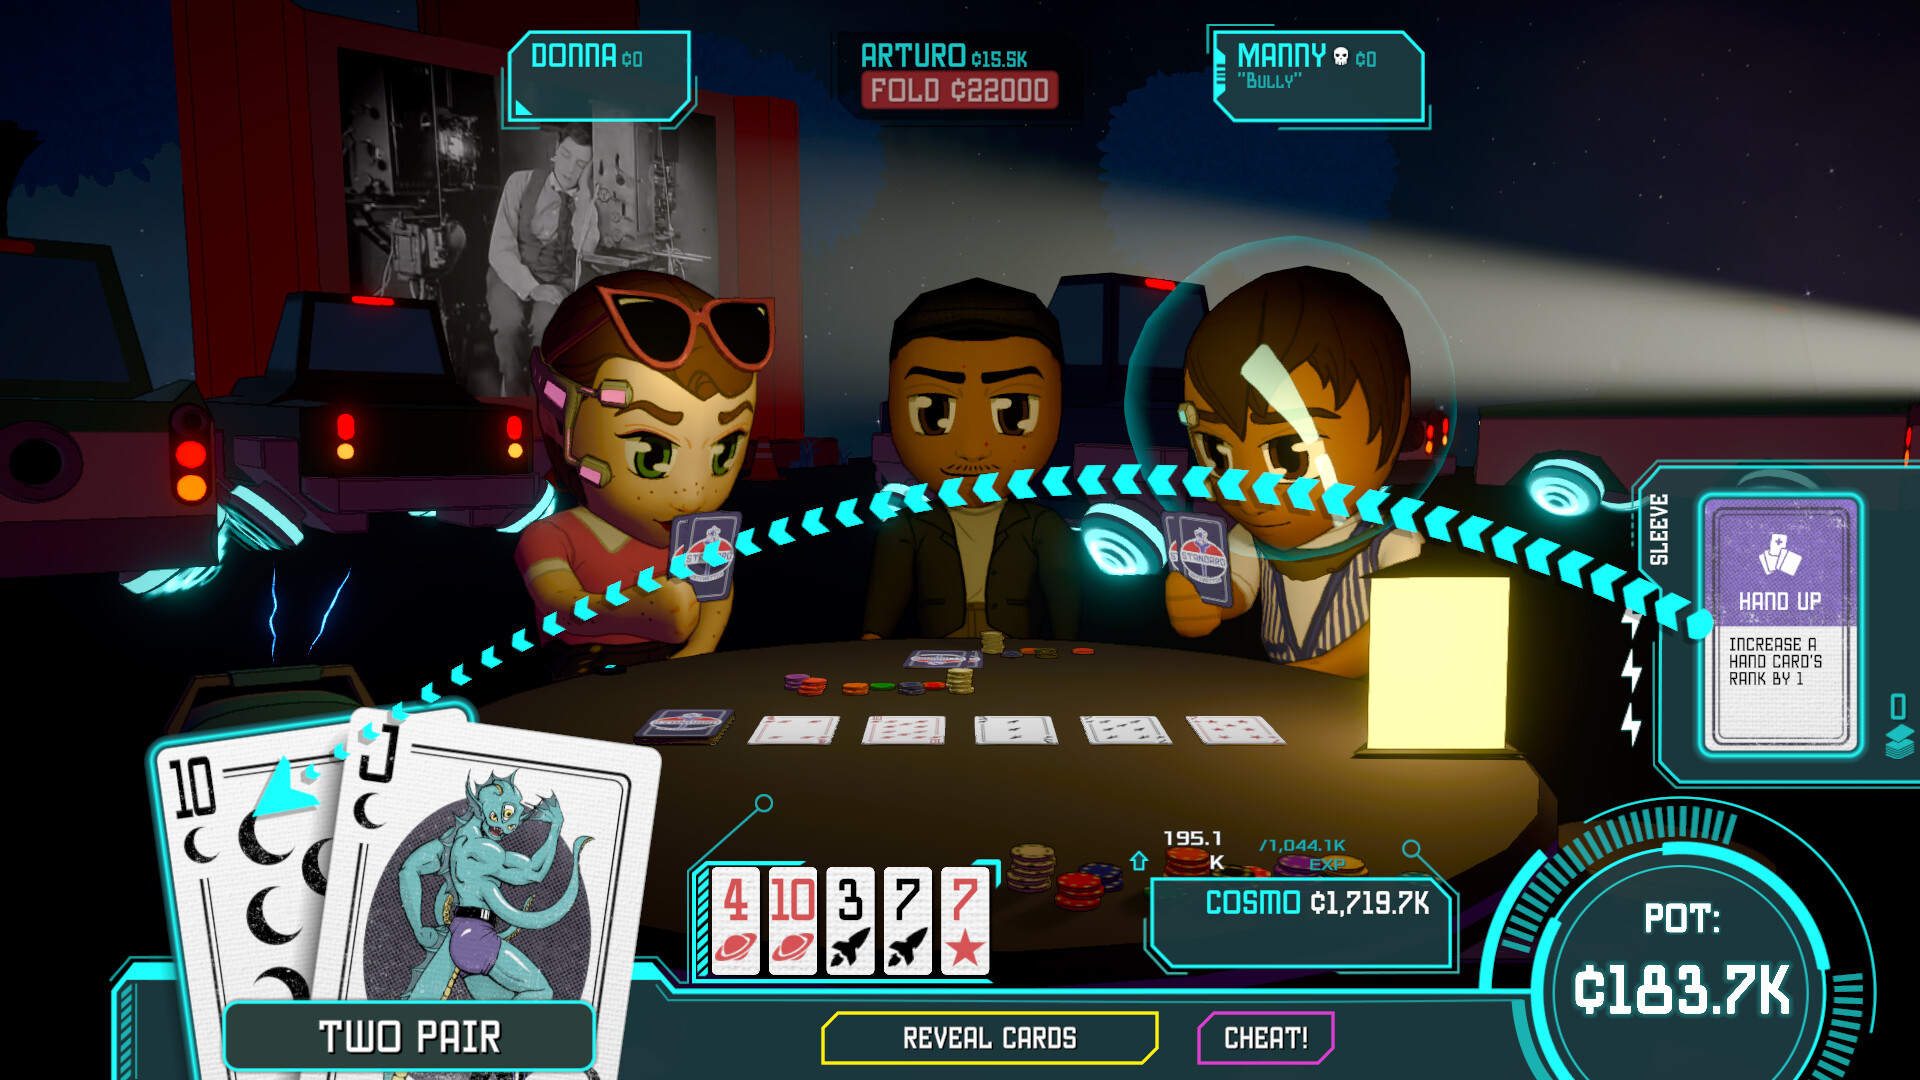 Cosmo Cheats at Poker Steam CD Key [USD 5.54]